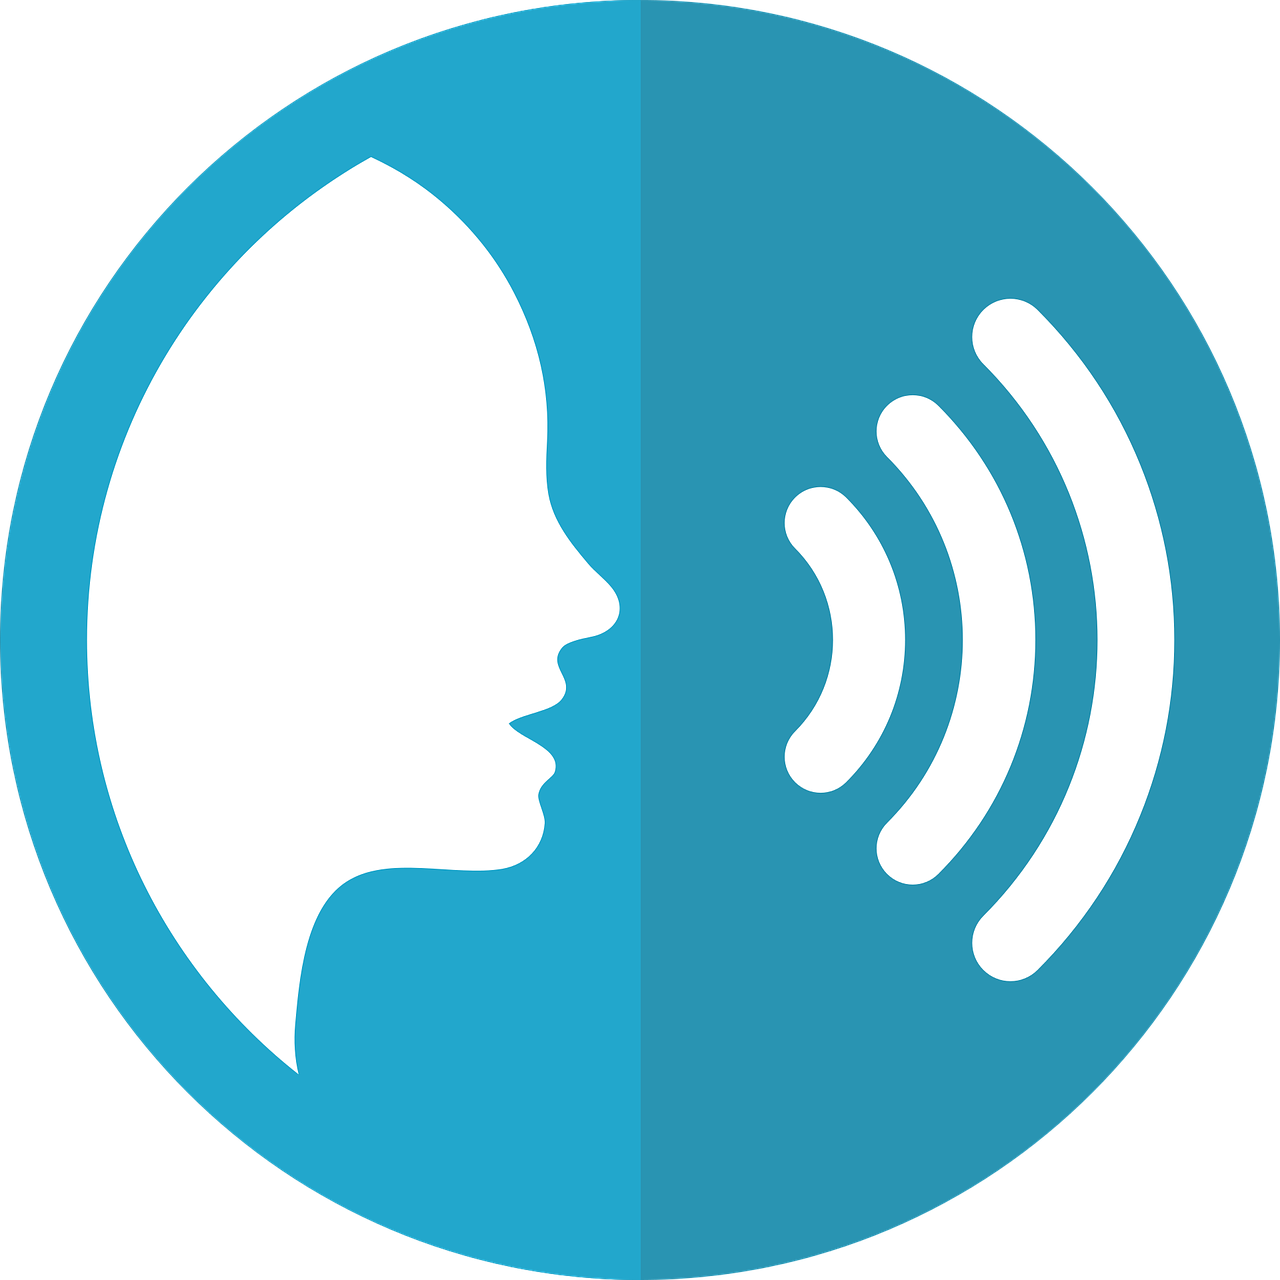 Audio description using synthetic voices - a modern alternative